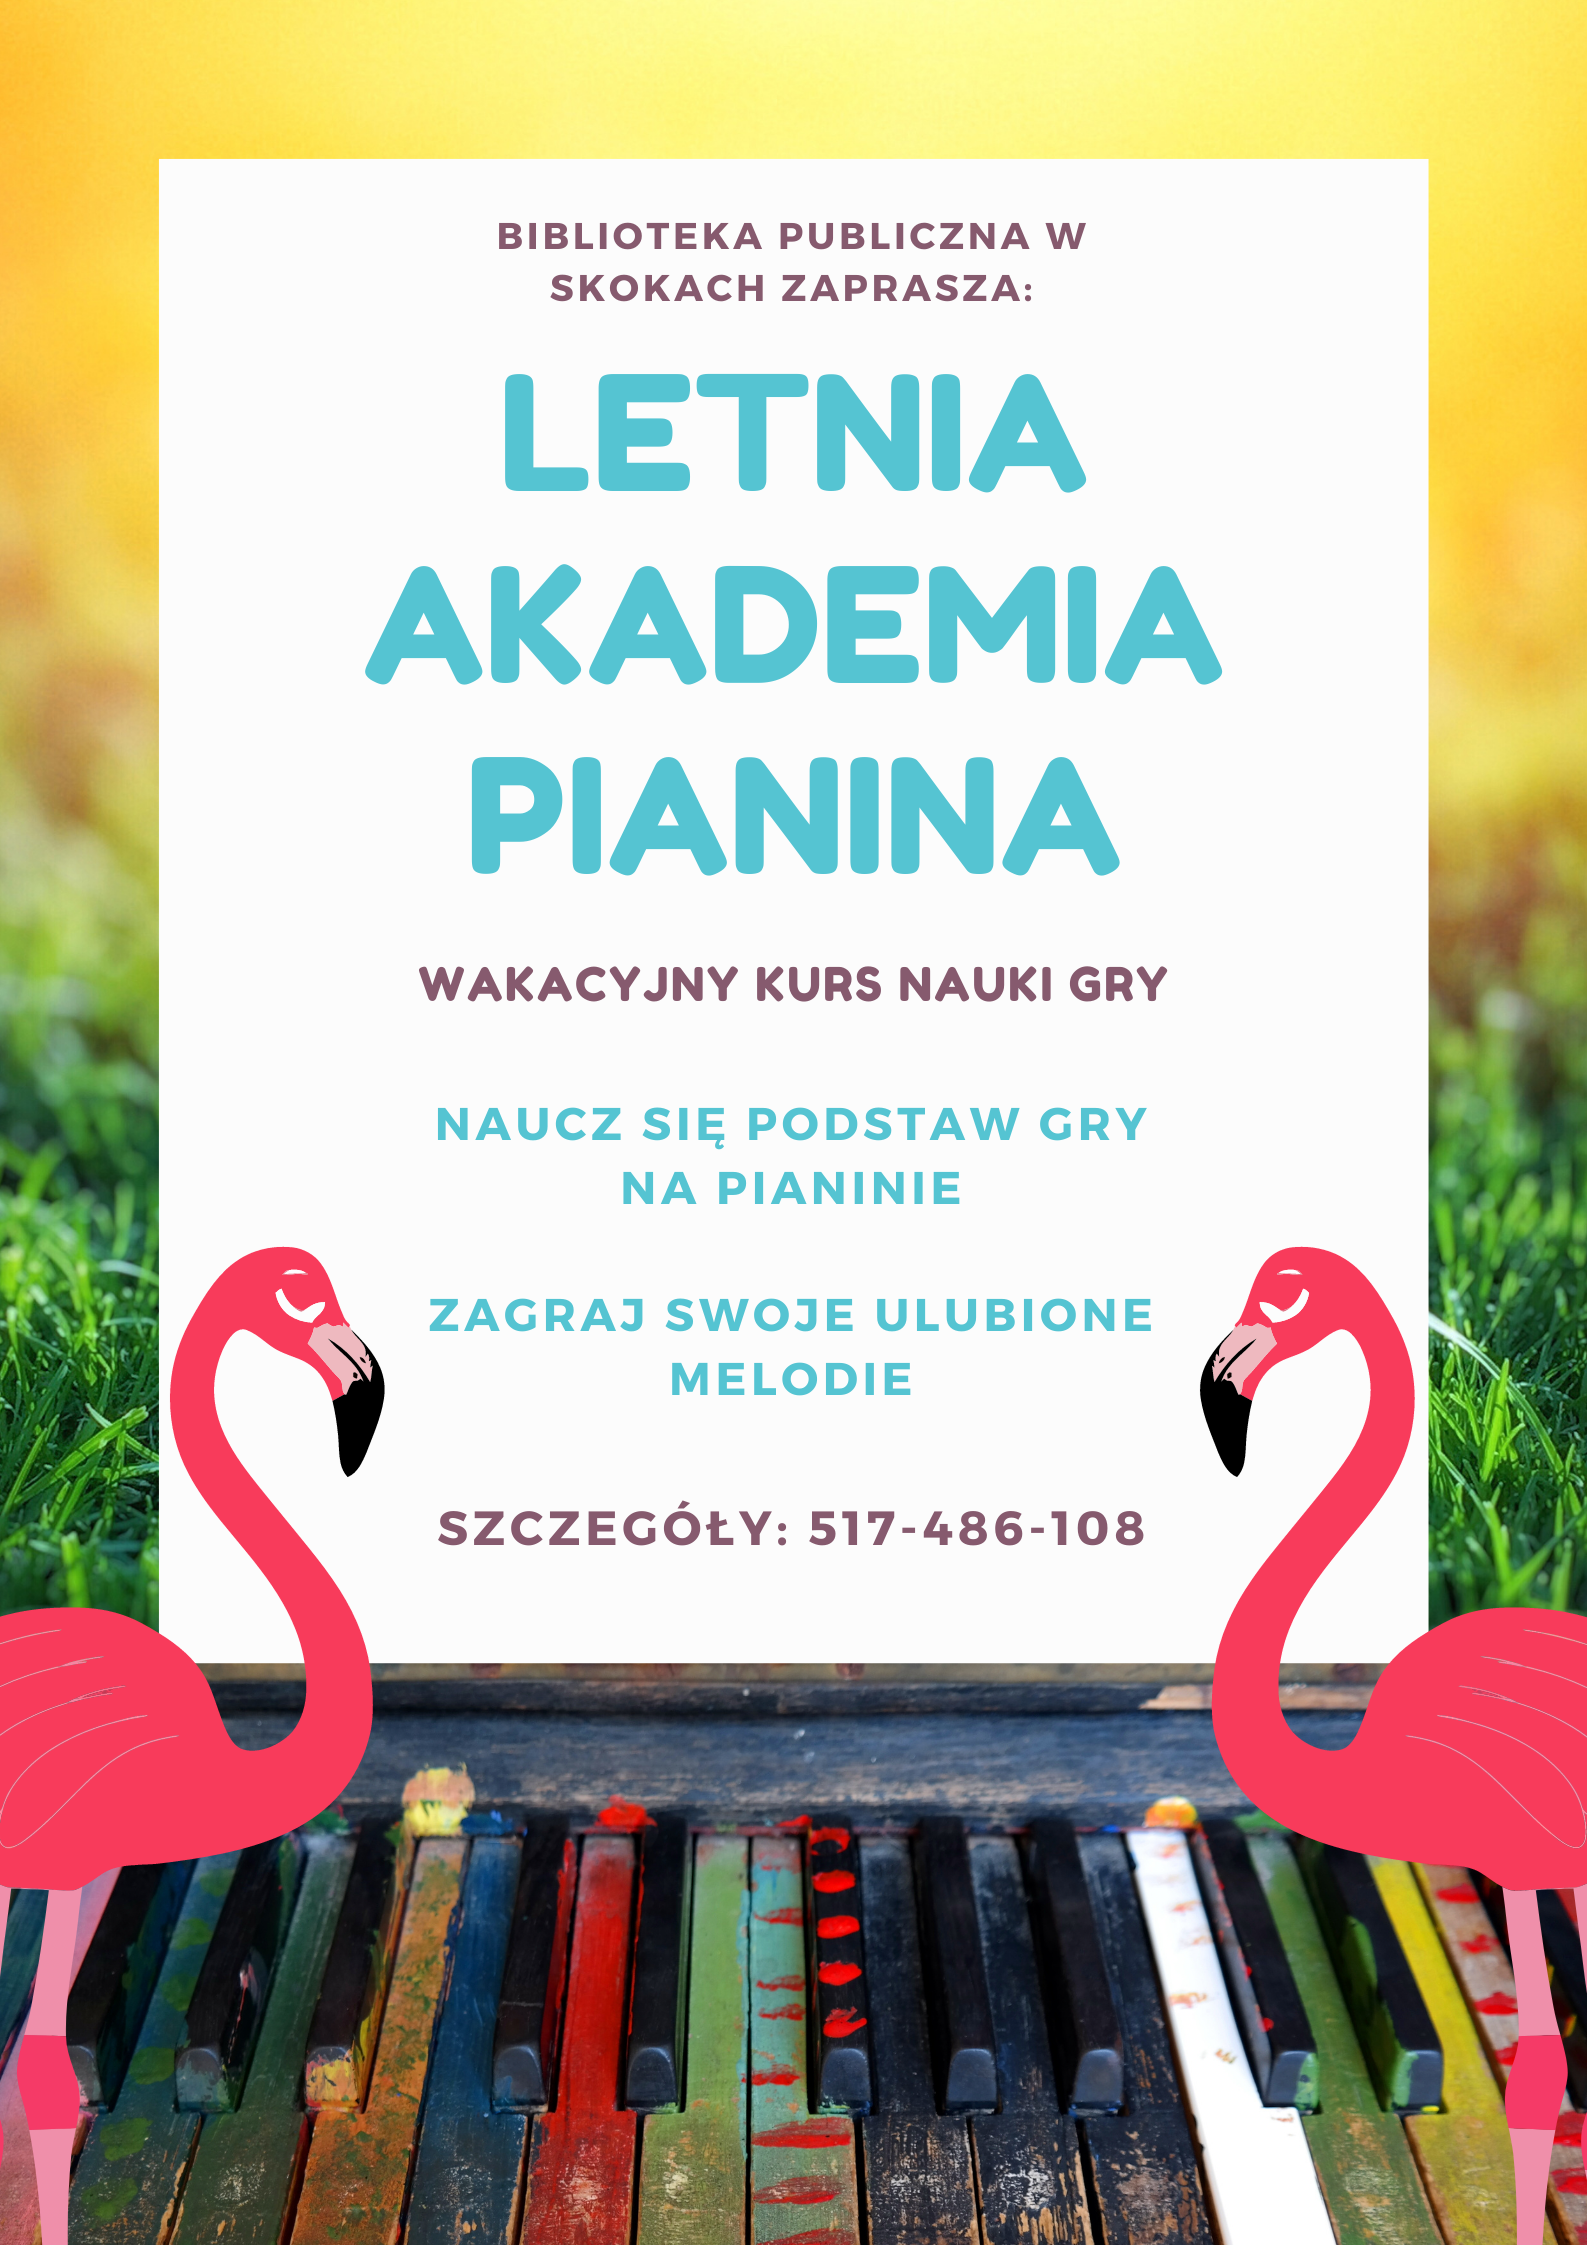 Napis: letnia akademia pianina. Grafika kolorowa klawiatura pianina oraz dwa różowe flamingi.